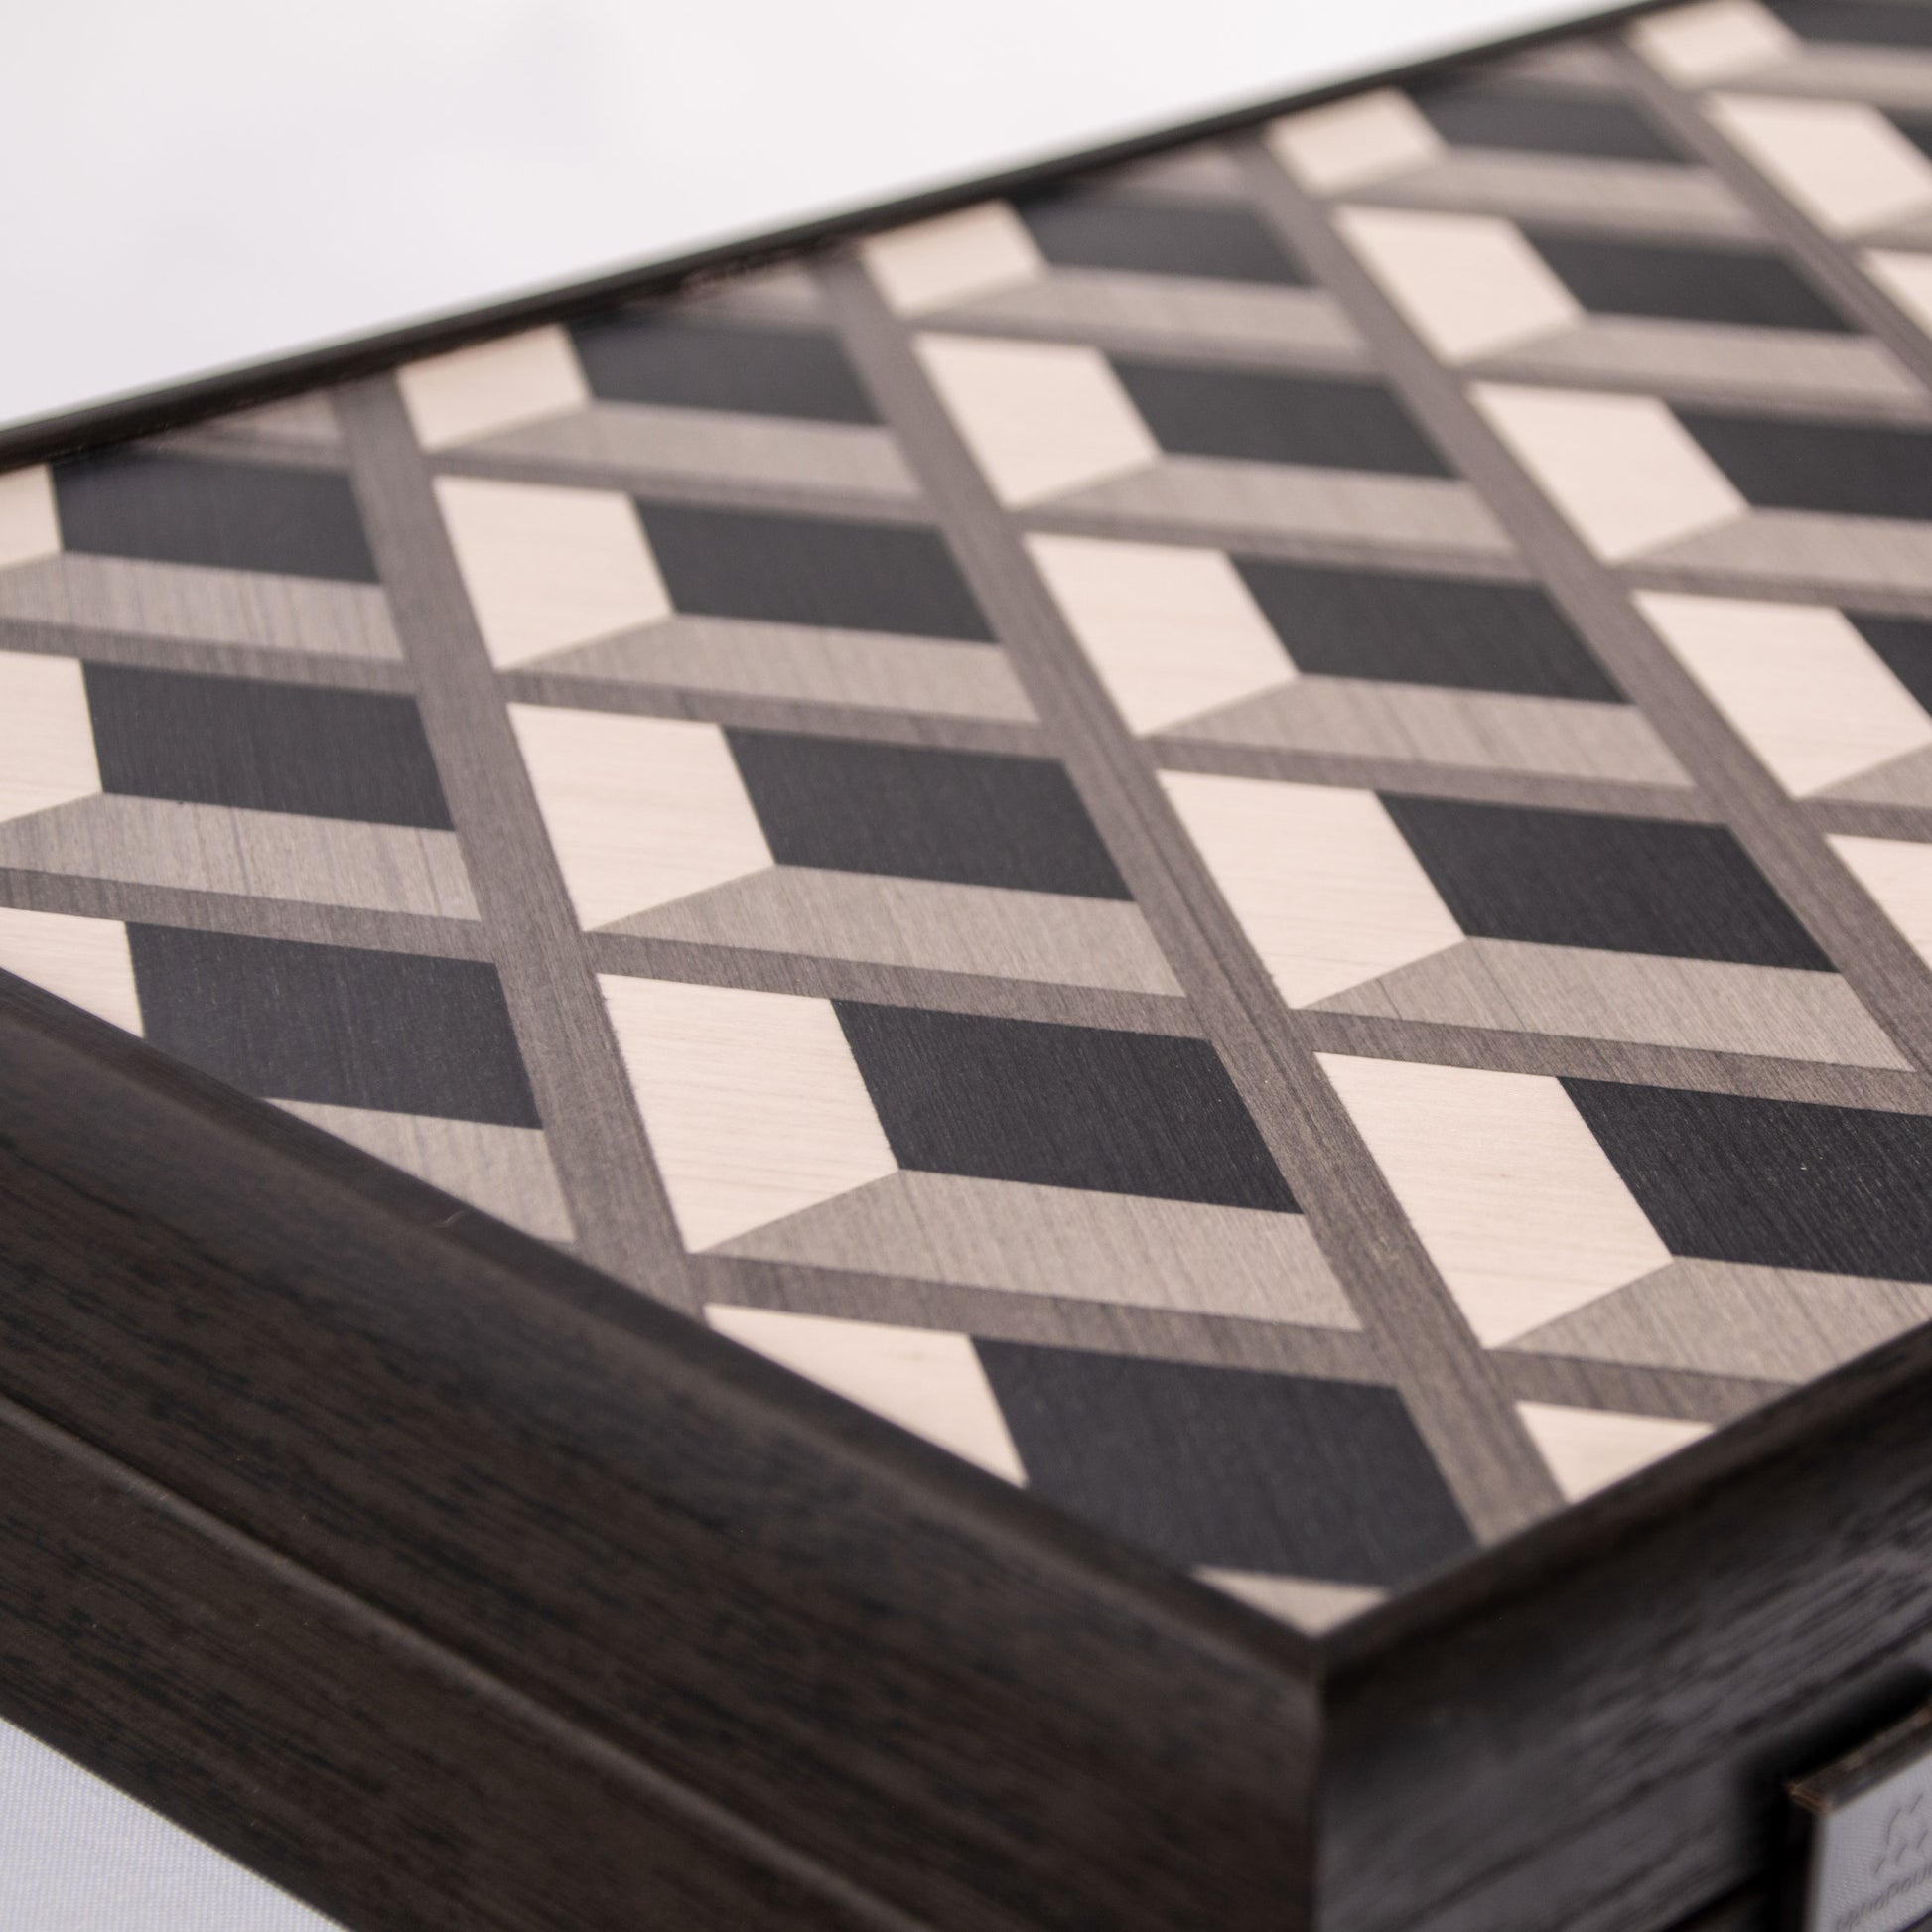 Premium Handcrafted Grid Wood Illusion Backgammon Set - Premium Backgammon from MANOPOULOS Chess & Backgammon - Just €520! Shop now at MANOPOULOS Chess & Backgammon